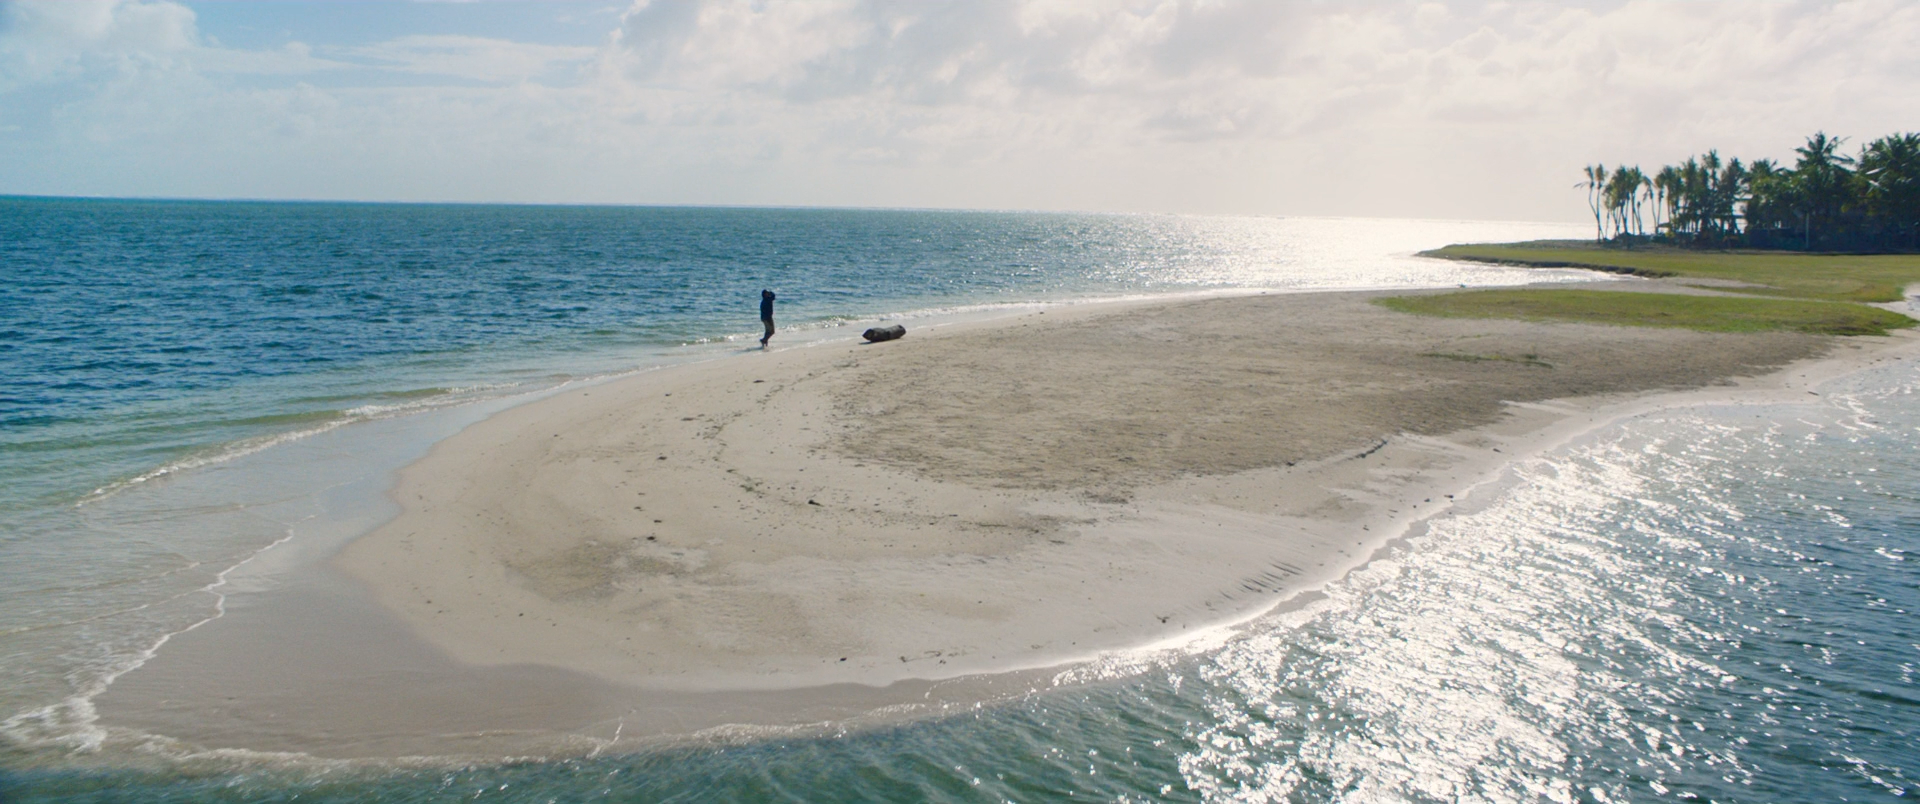 Море соблазна / Serenity (2019) BDRip 1080p | Лицензия